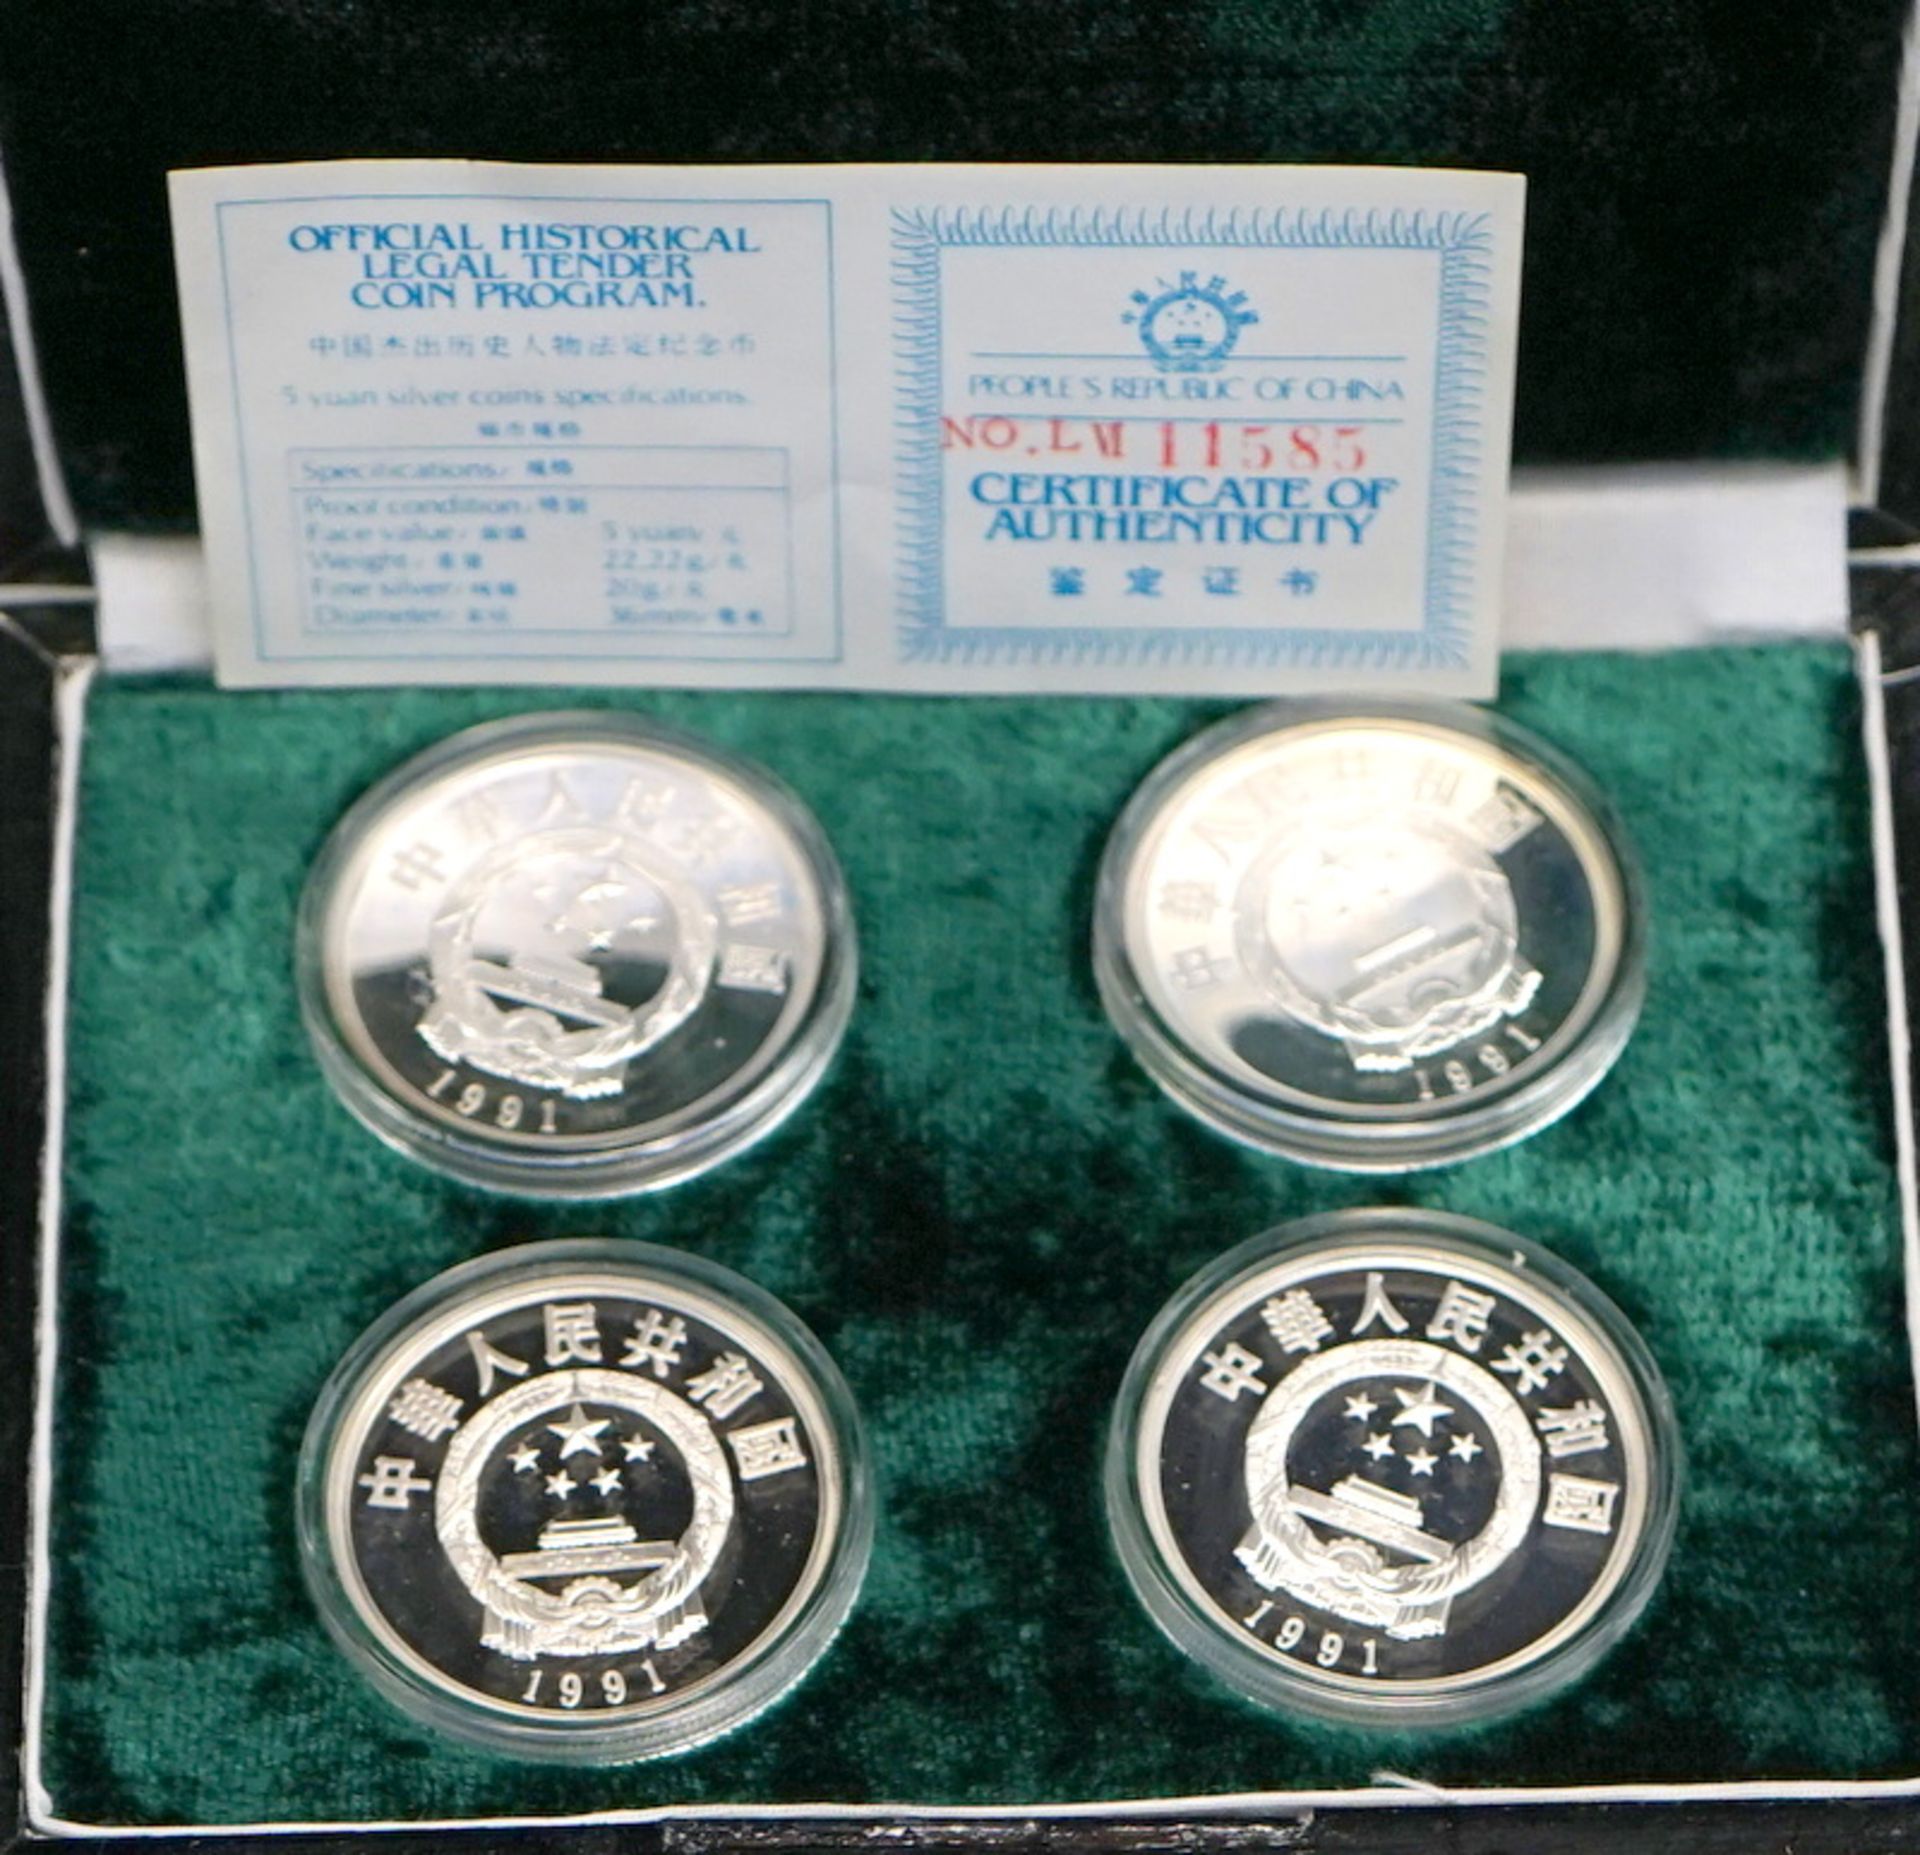 12 Münzen, Silber, China, 5 Yuan, 1984, 1991, 1993,jeweils 4x 1984, 1991, 1993, 5 Yuan, - Bild 2 aus 2